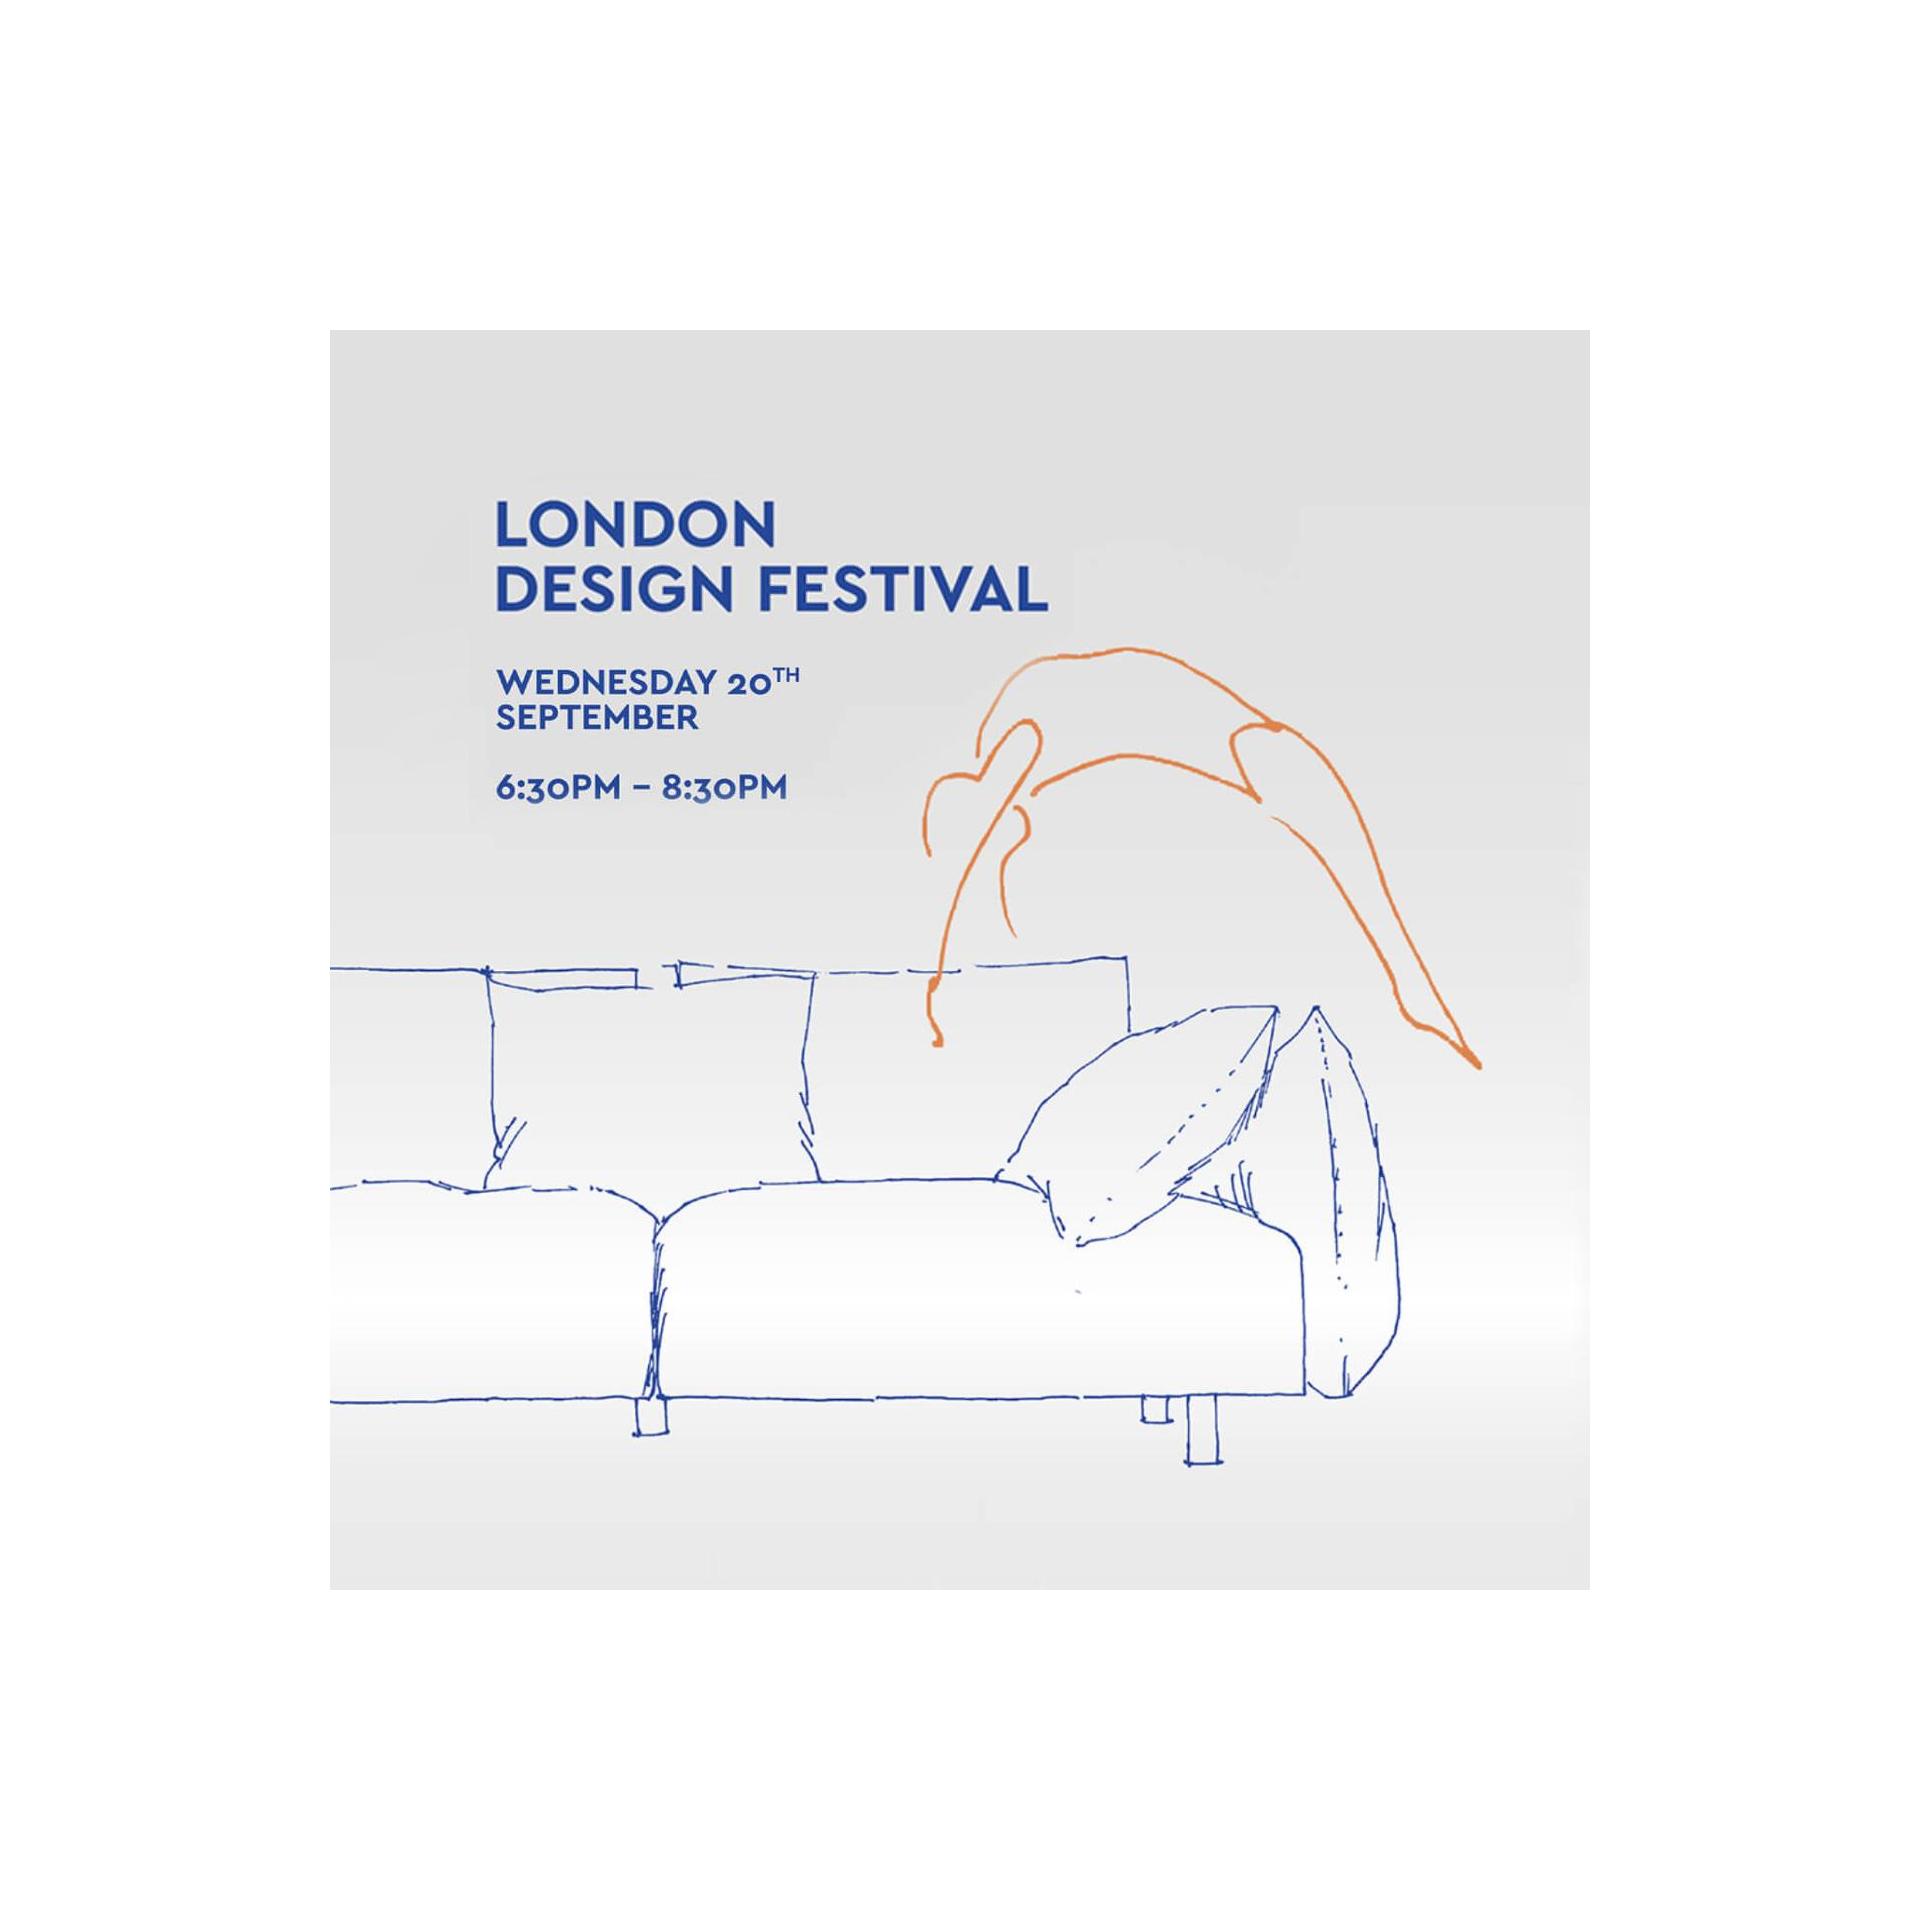 London Design Festival is approaching